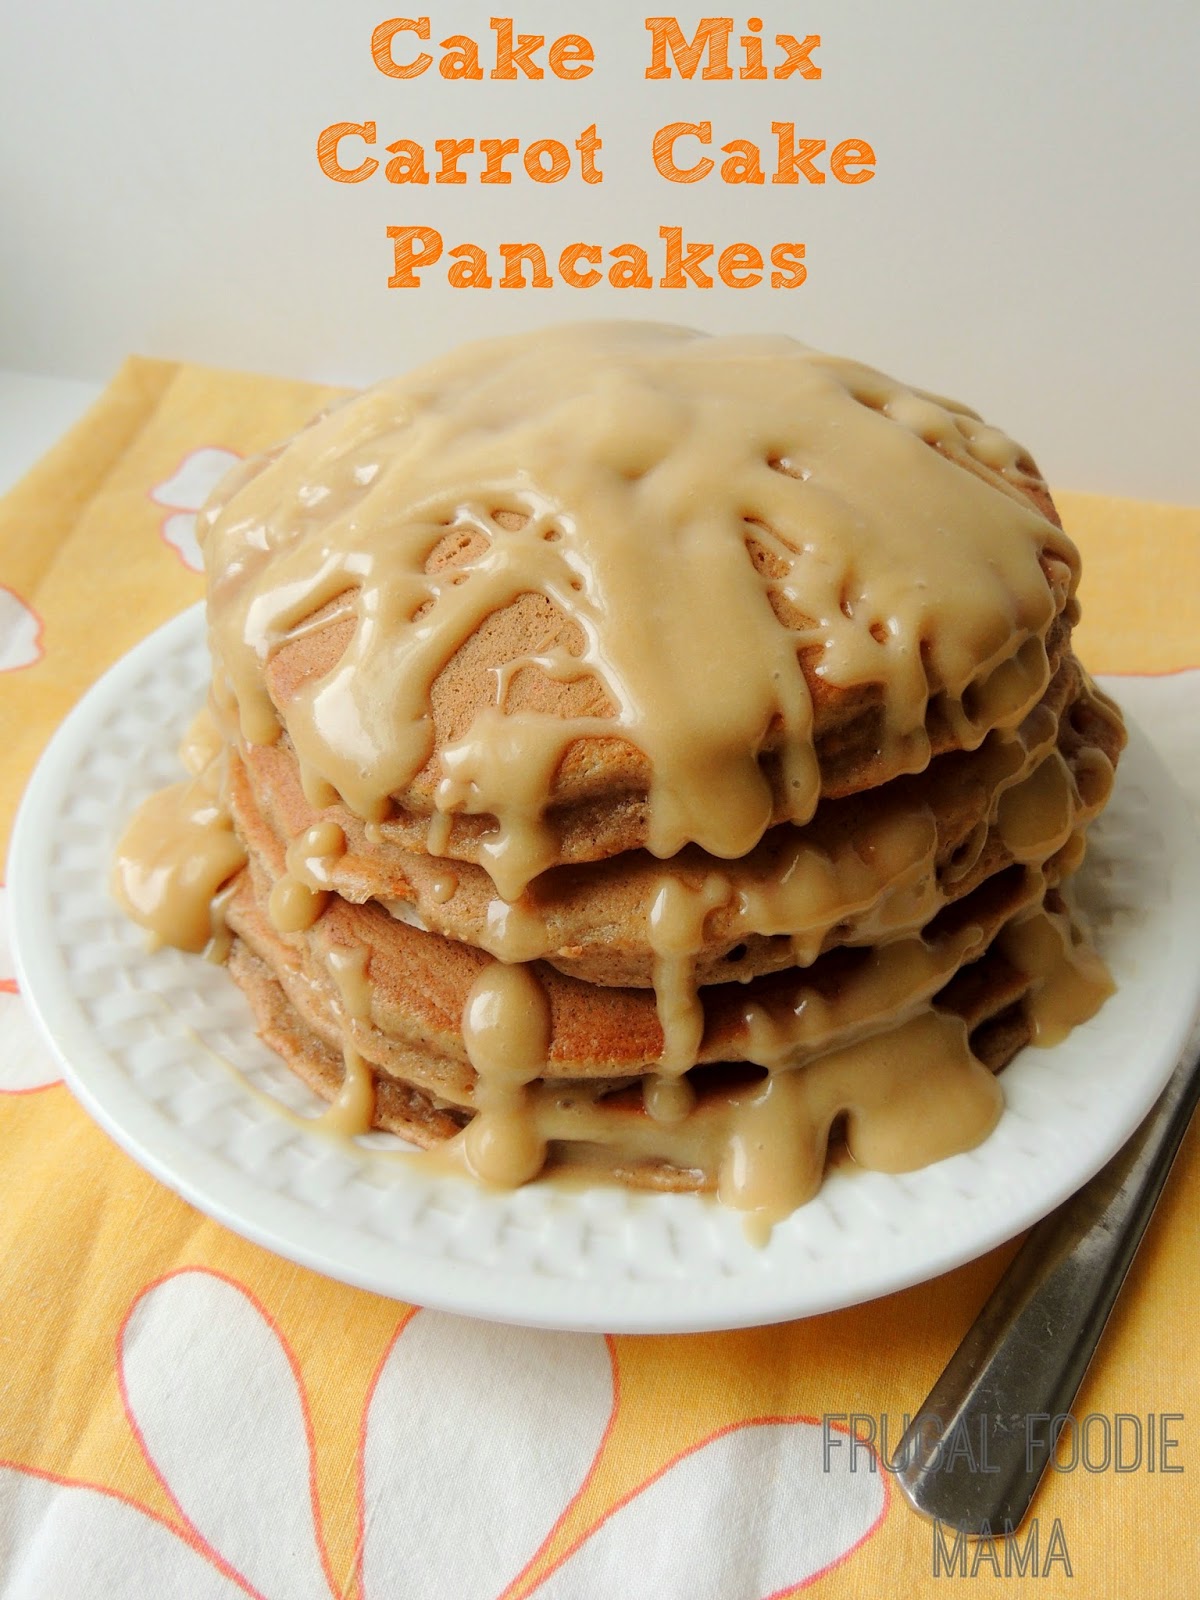 mix via how thefrugalfoodiemama.com do make cake  Pancakes Carrot Cake Mix Cake with you pancakes